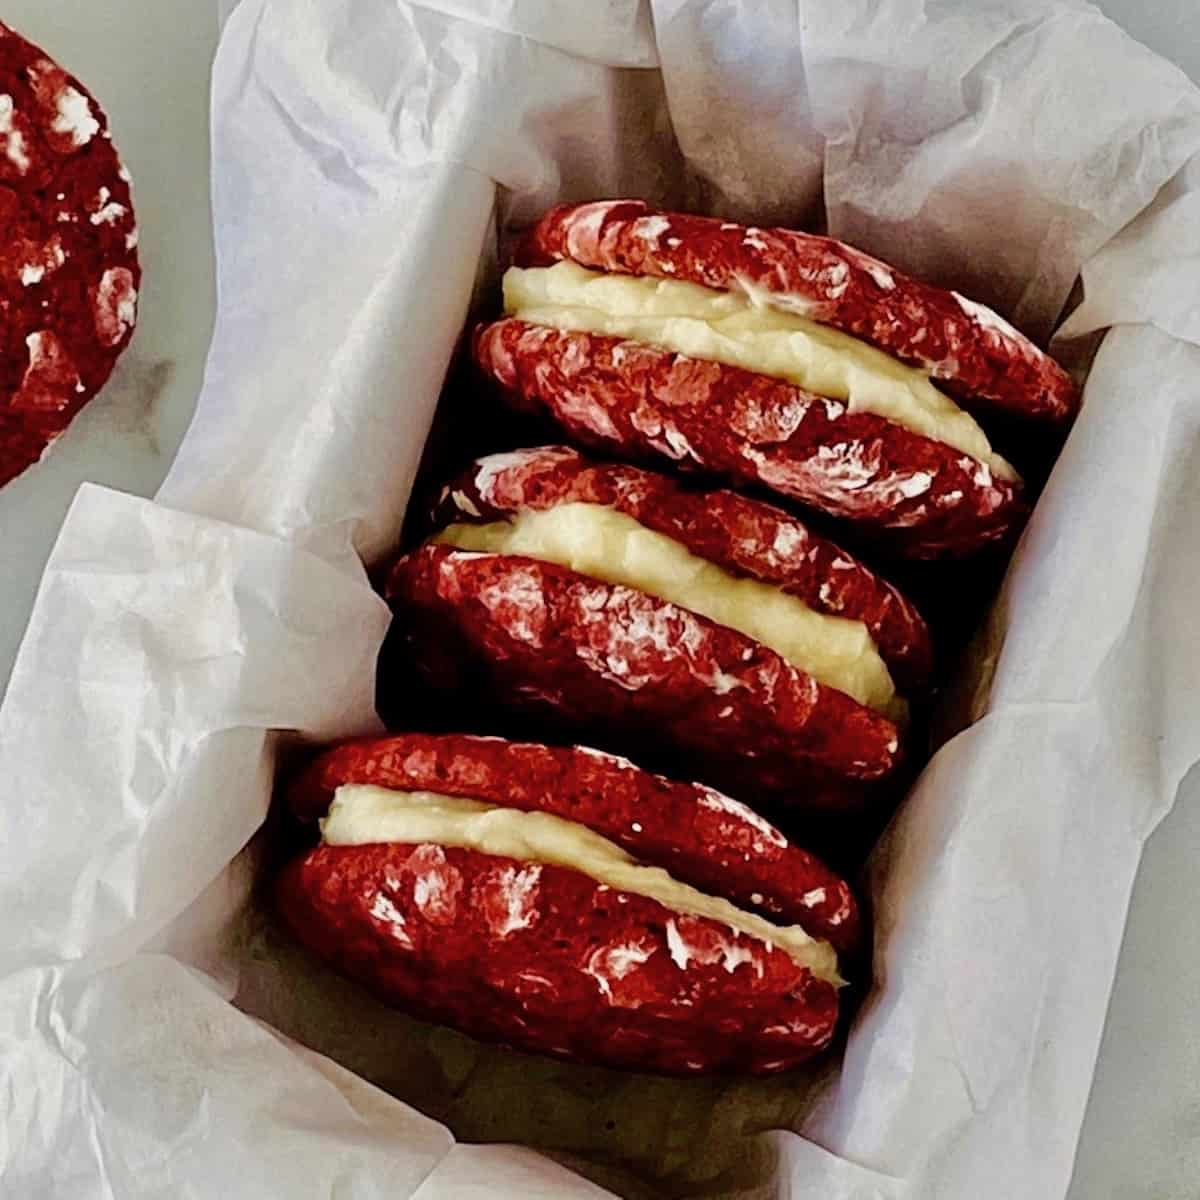 Red Velvet Crinkle Cookie Sandwiches - The Short Order Cook